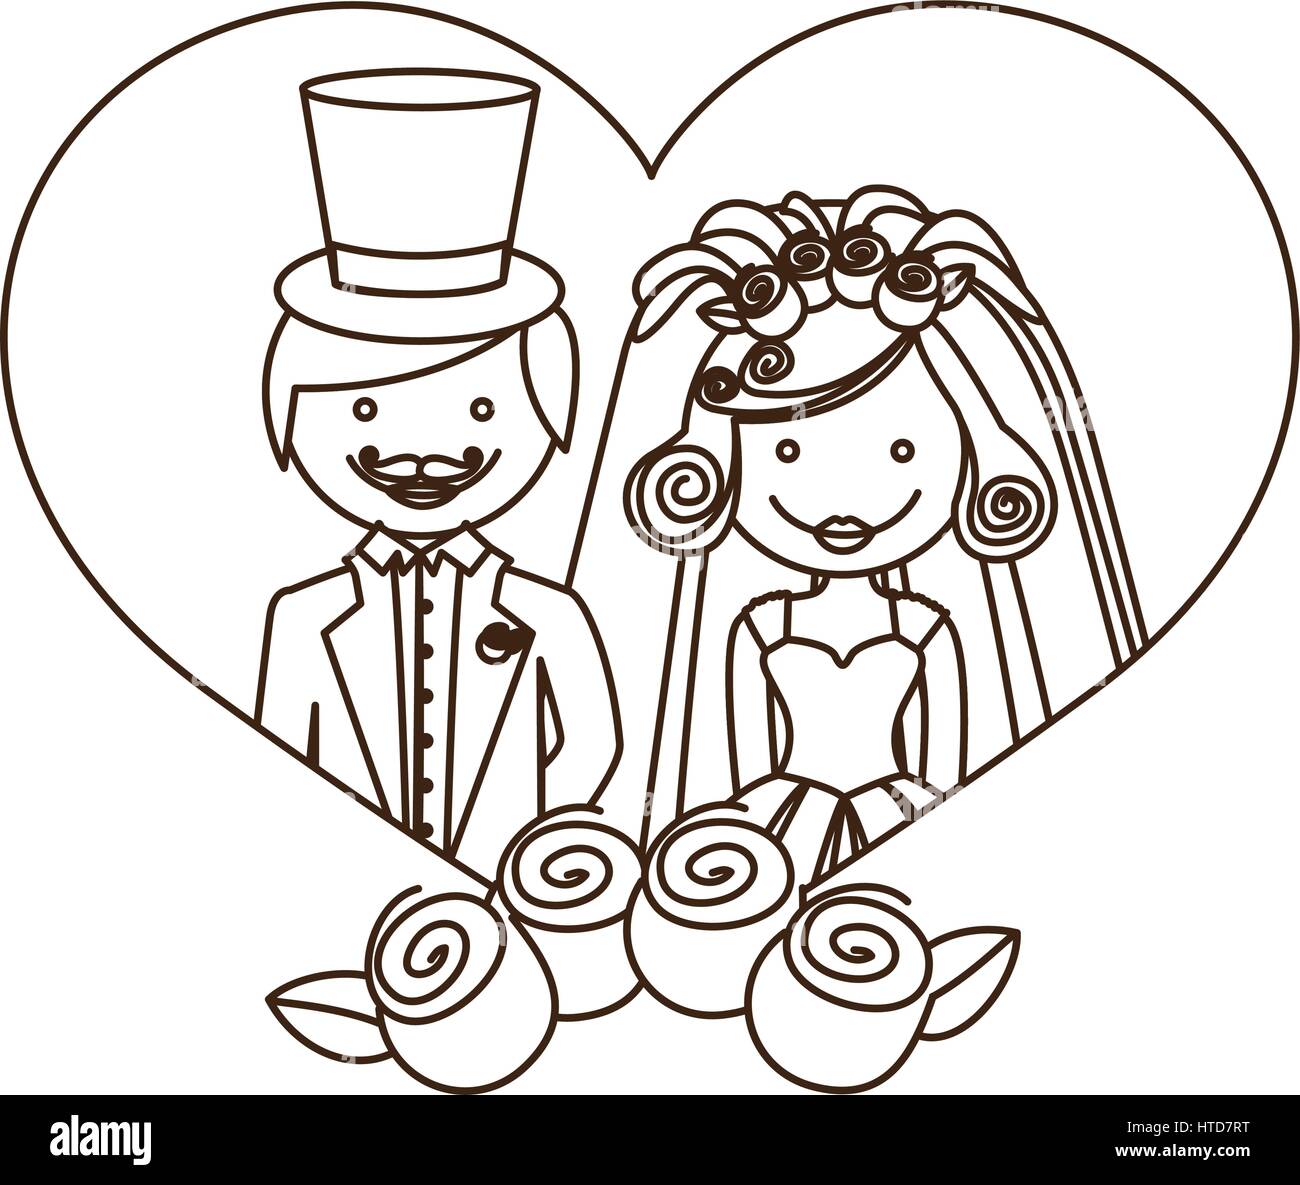 28,893 Wedding Couple Sketch Images, Stock Photos & Vectors | Shutterstock